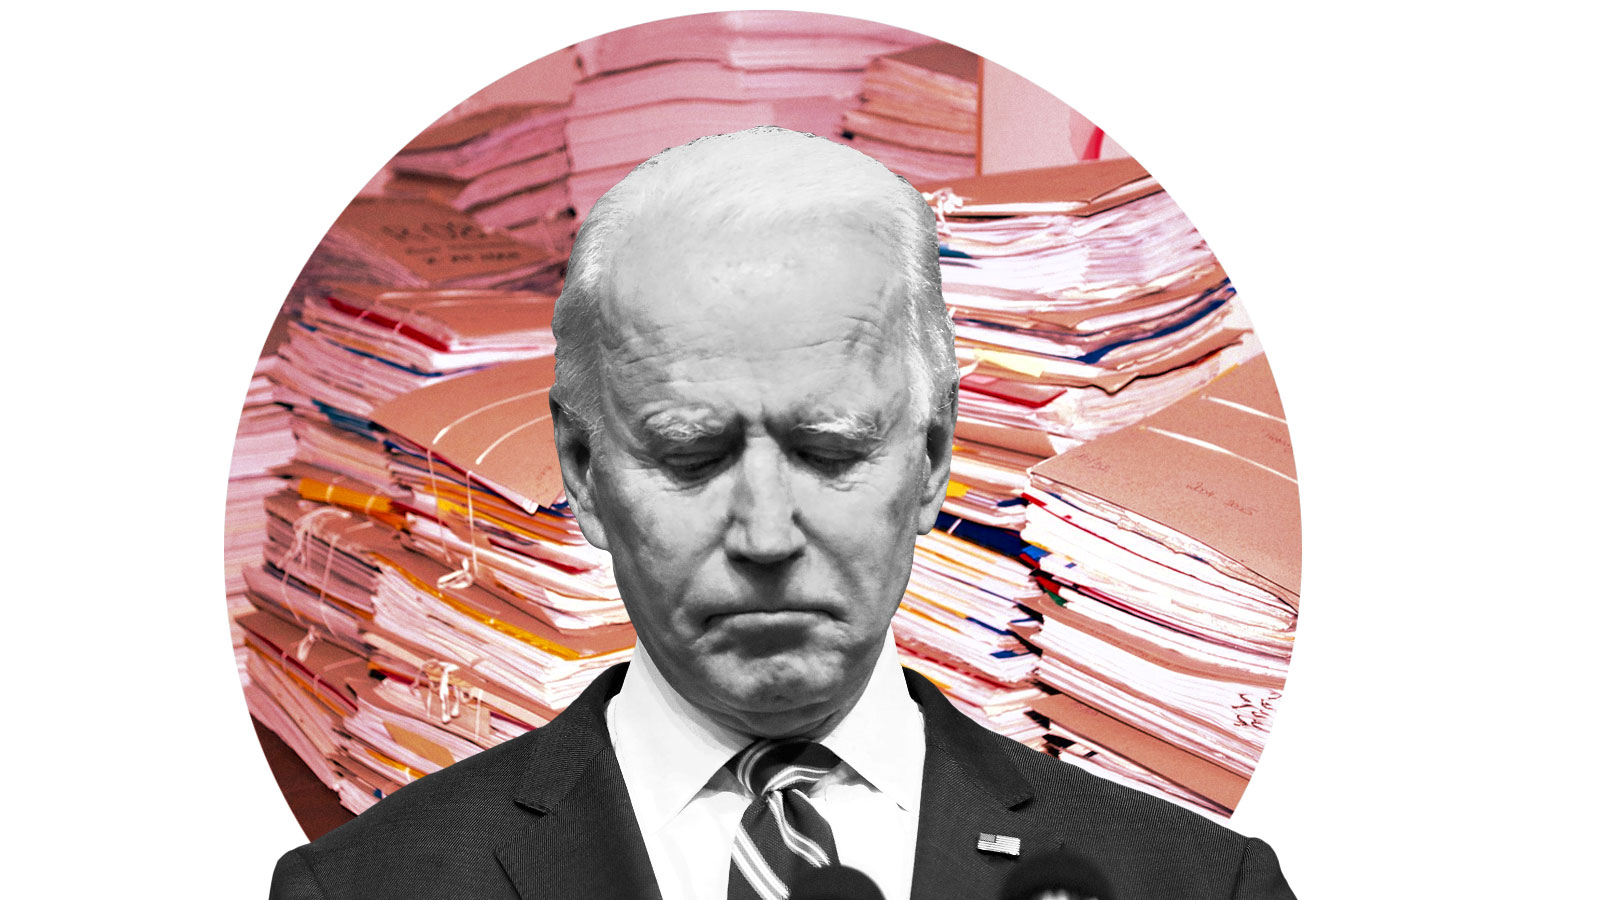 Joe Biden looking regretful in front of a circular image of stacks of files